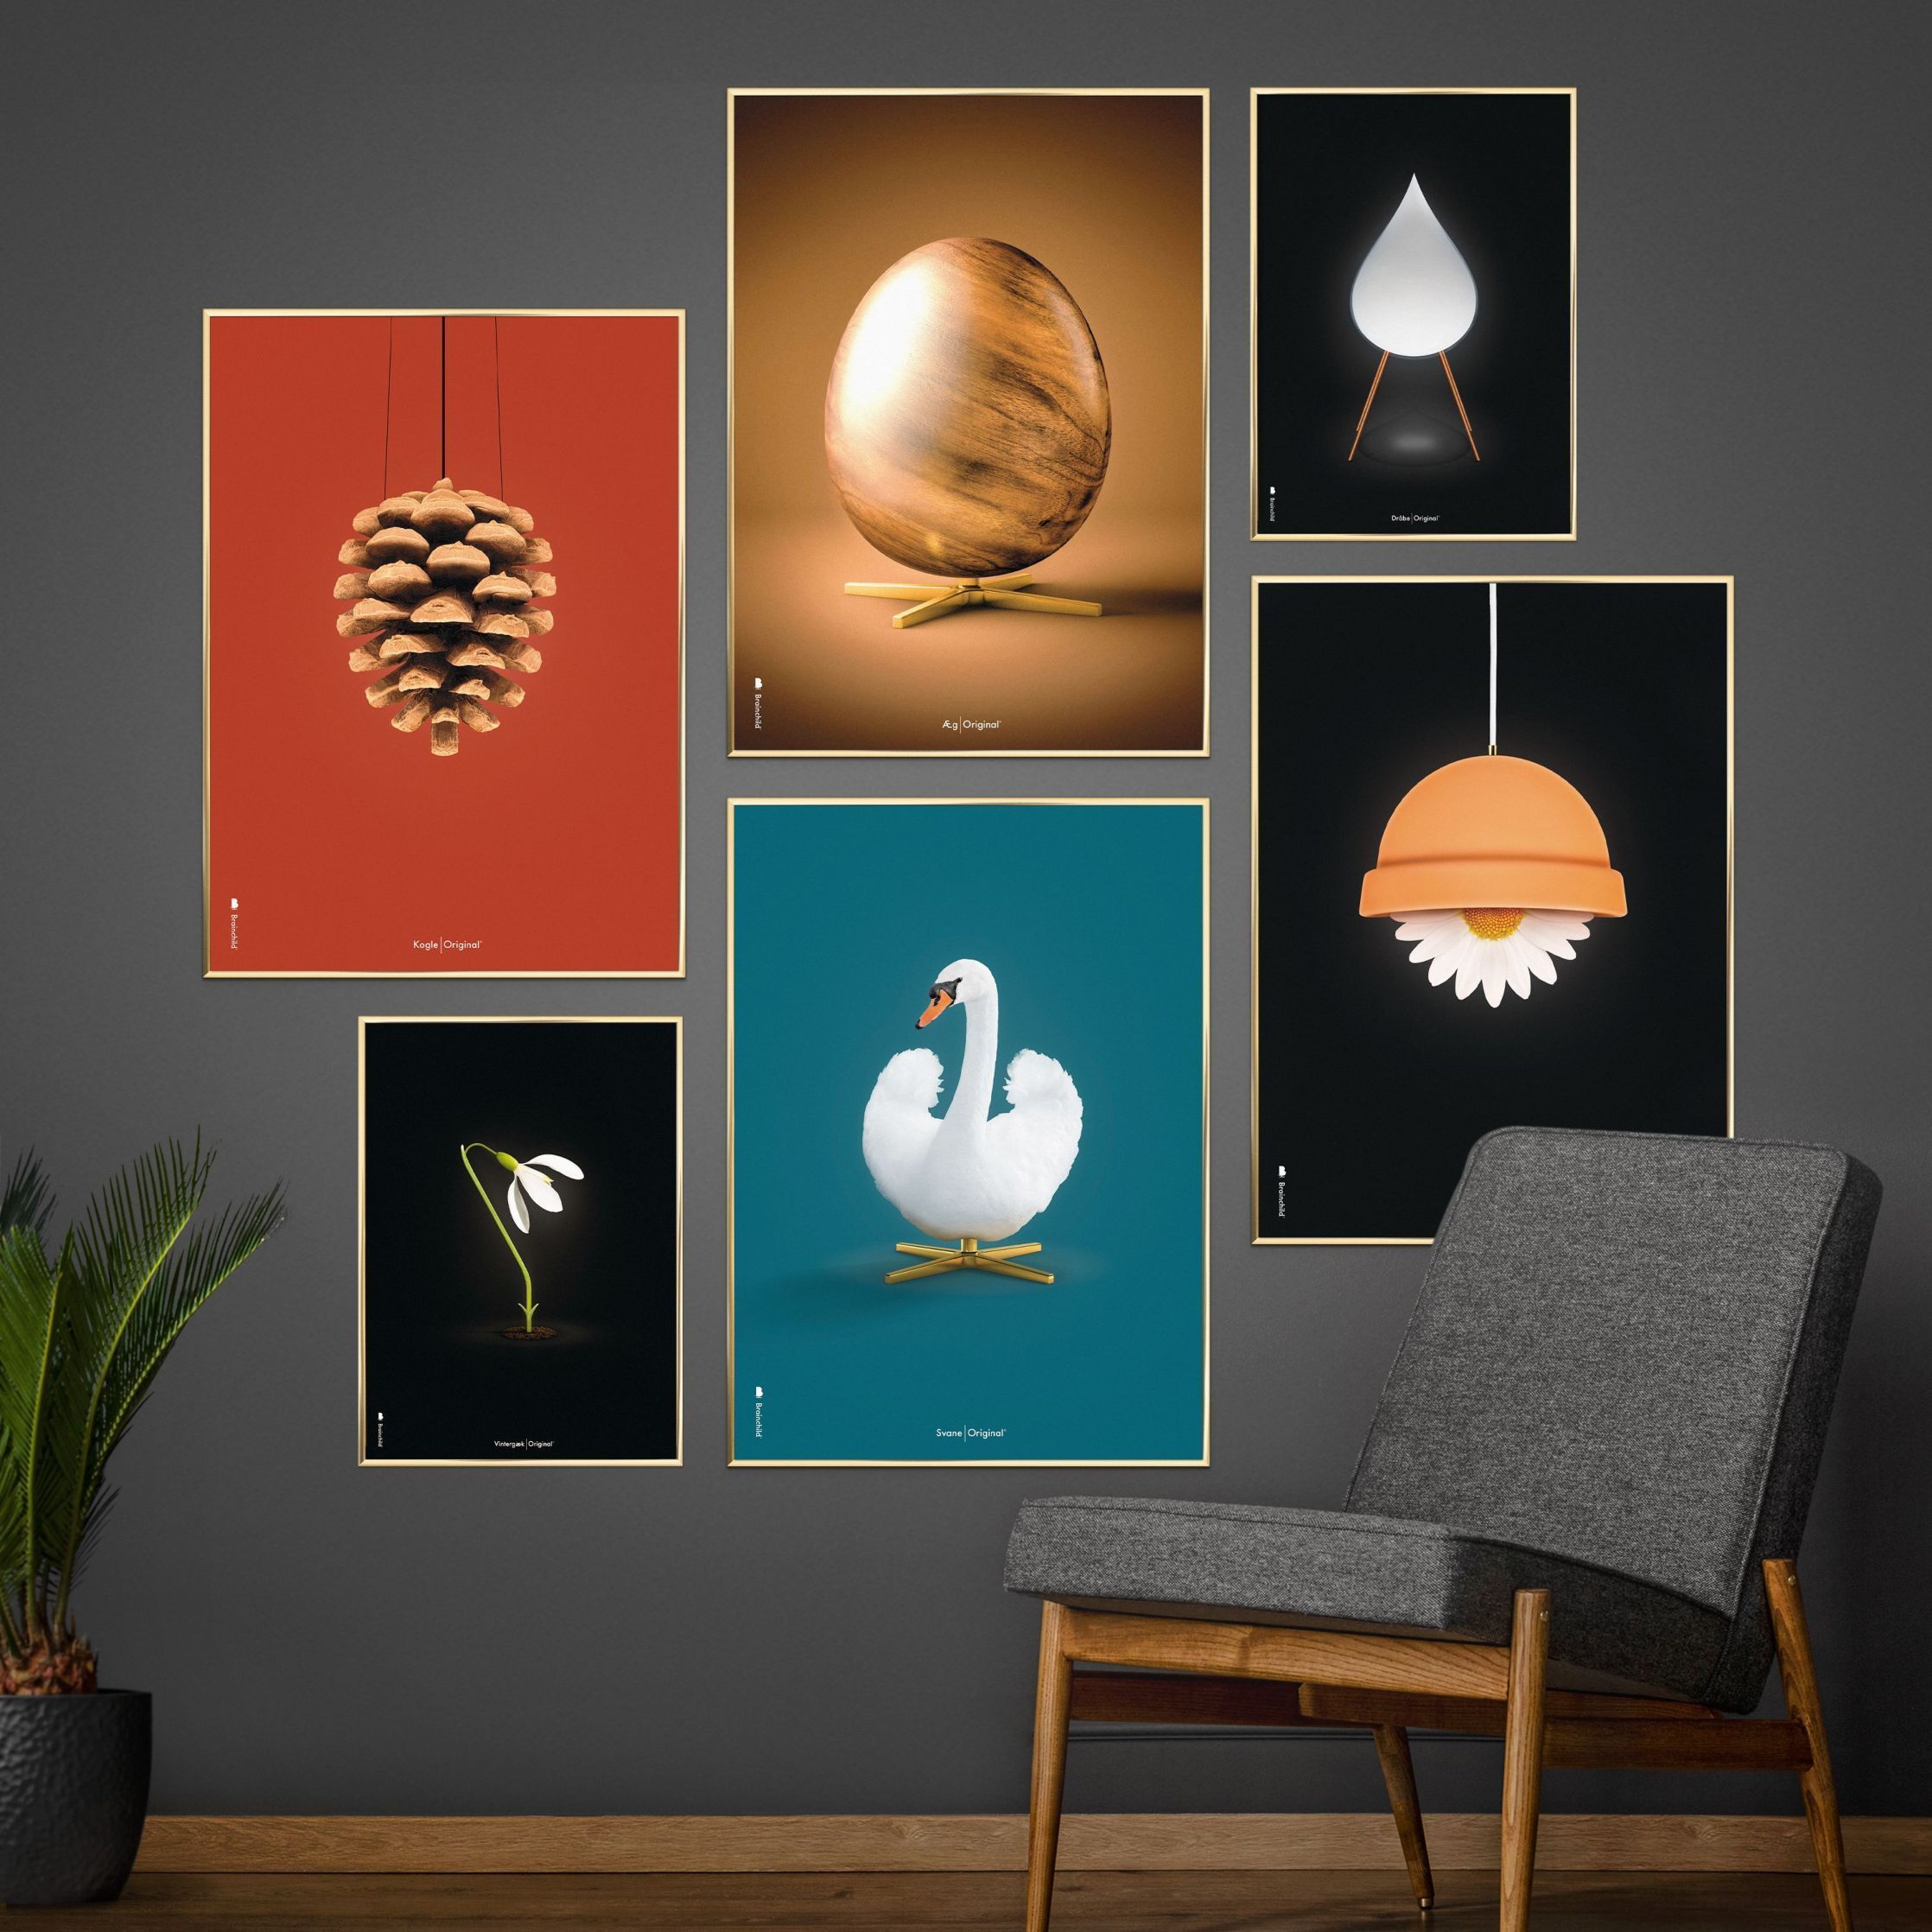 Brainchild Swan Classic Poster, ram i mörkt trä 30x40 cm, petroleumblå bakgrund